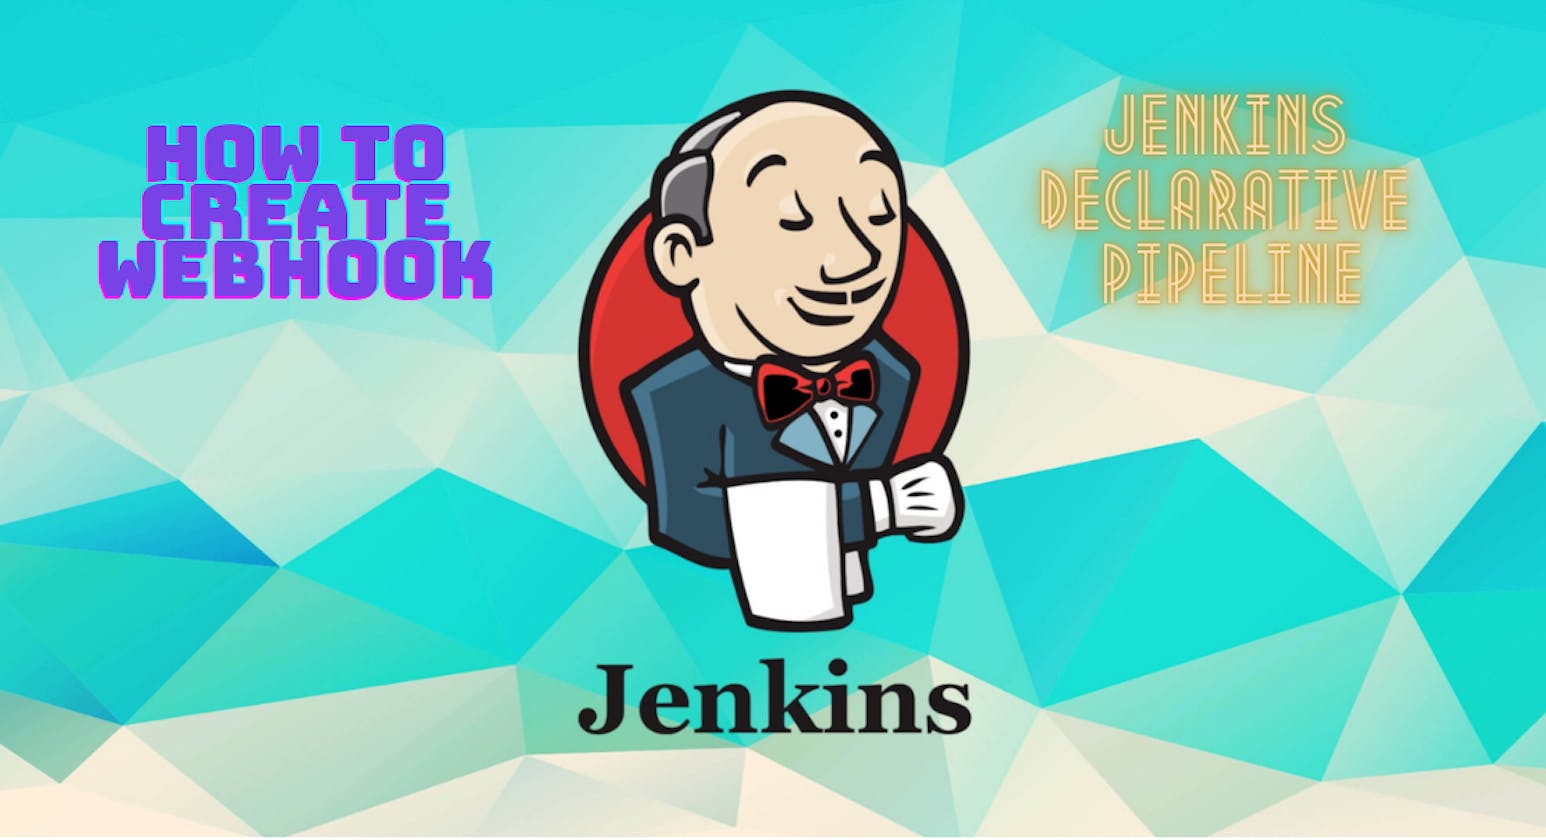 Day 19 - Jenkins Webhook and Declarative Pipeline